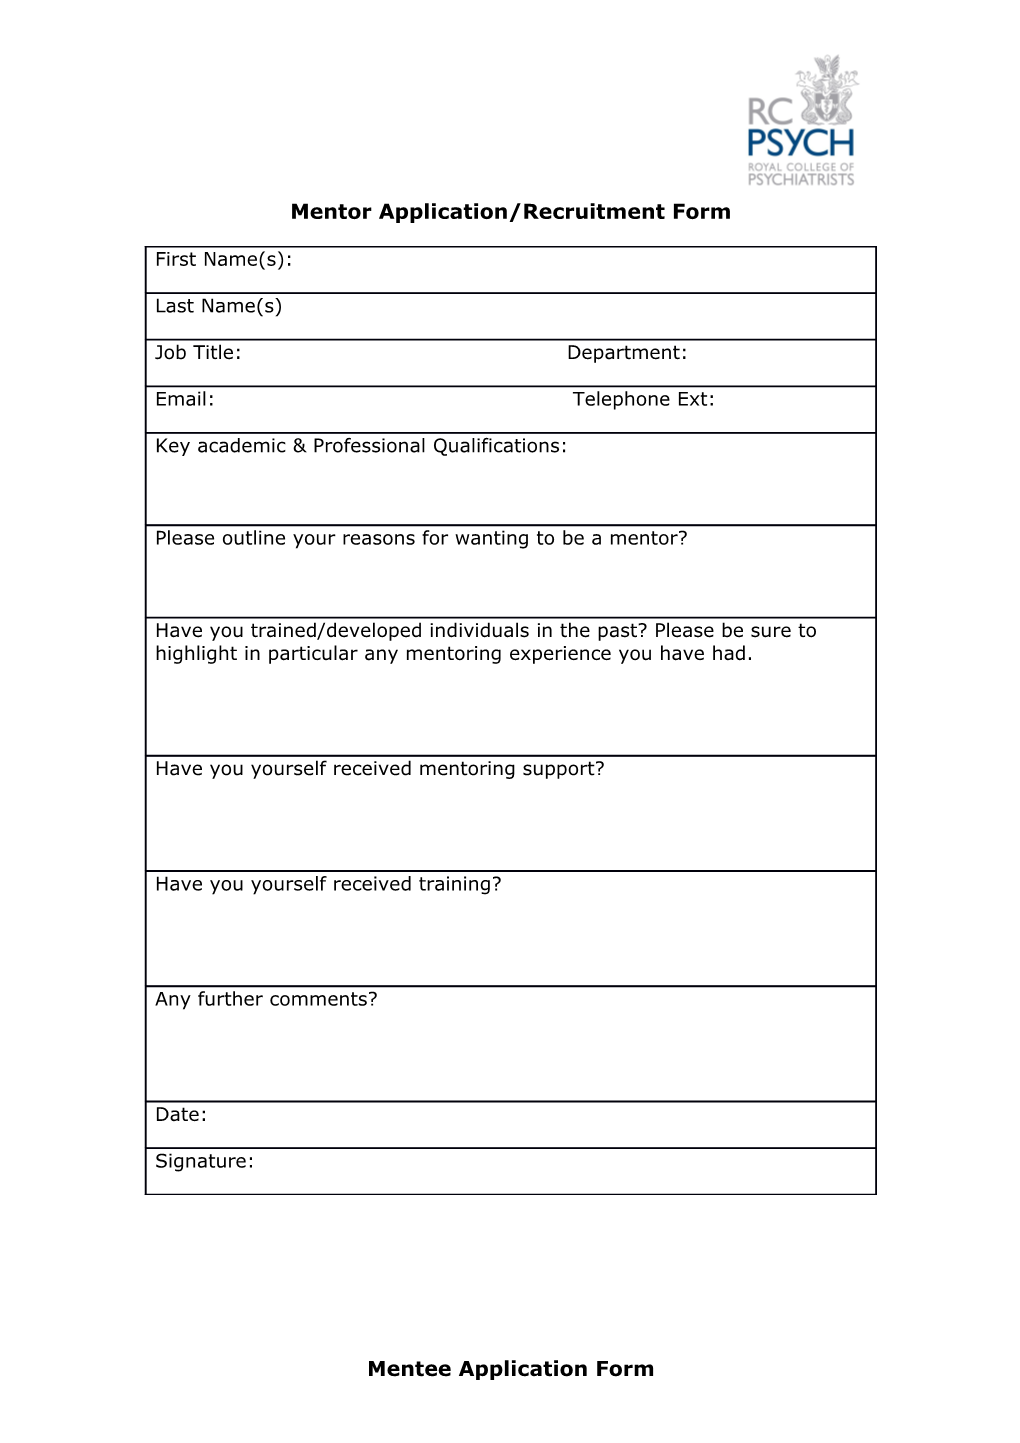 Mentor Application/Recruitment Form